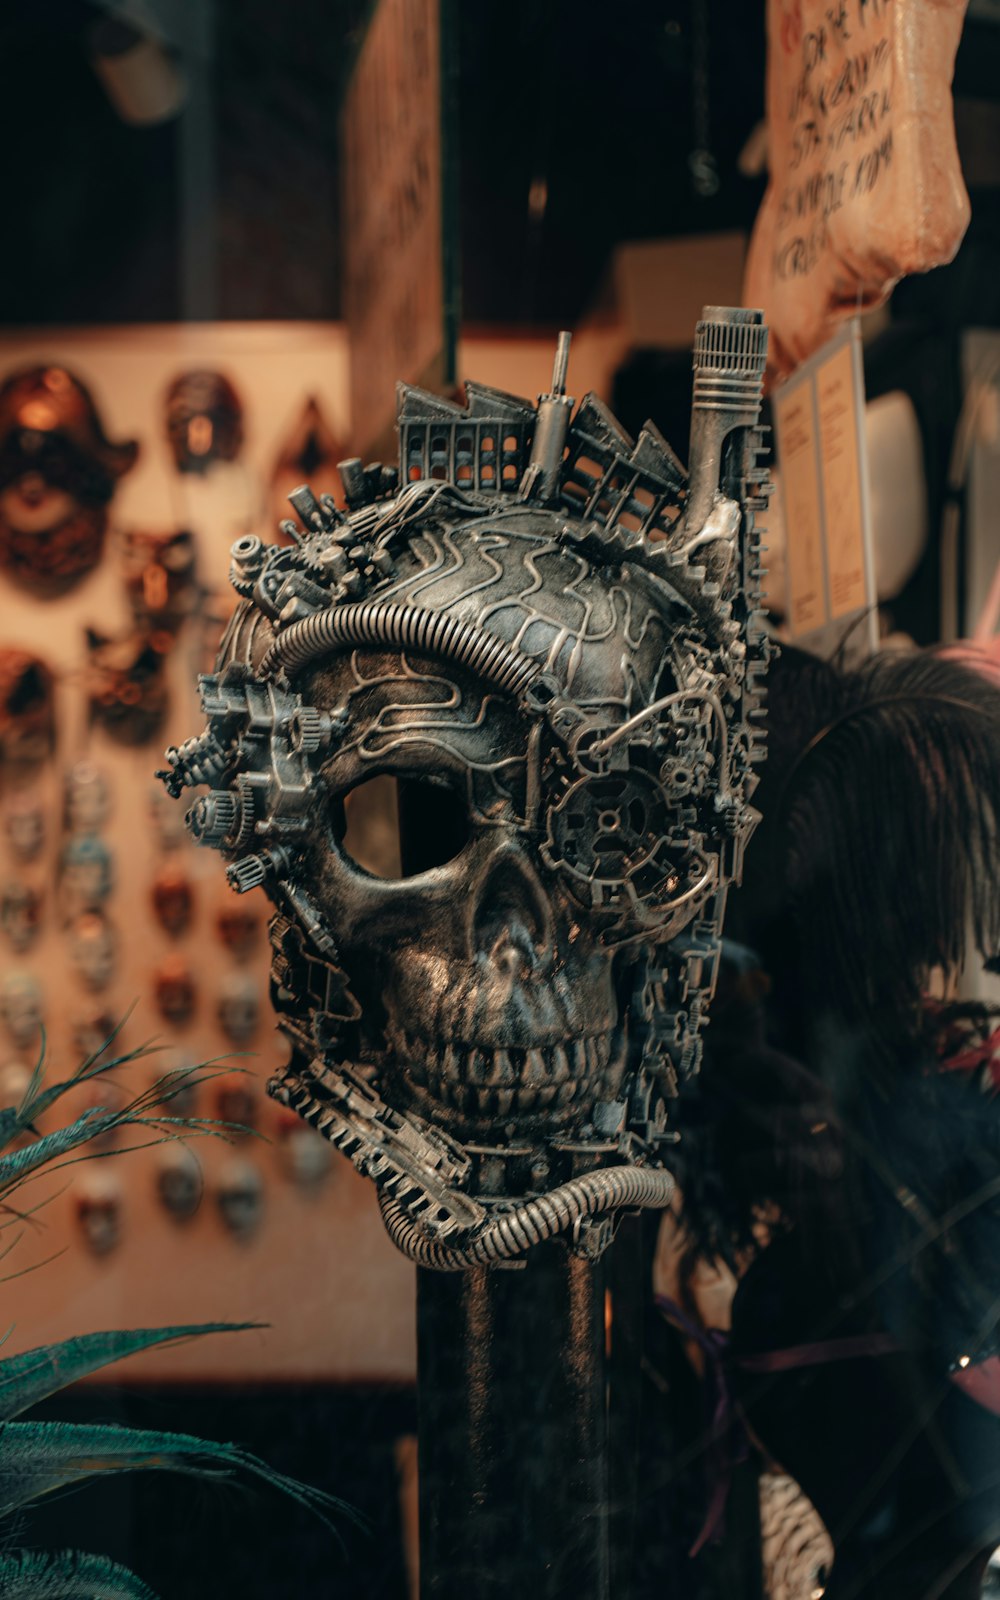 a sculpture of a human skull in a shop window